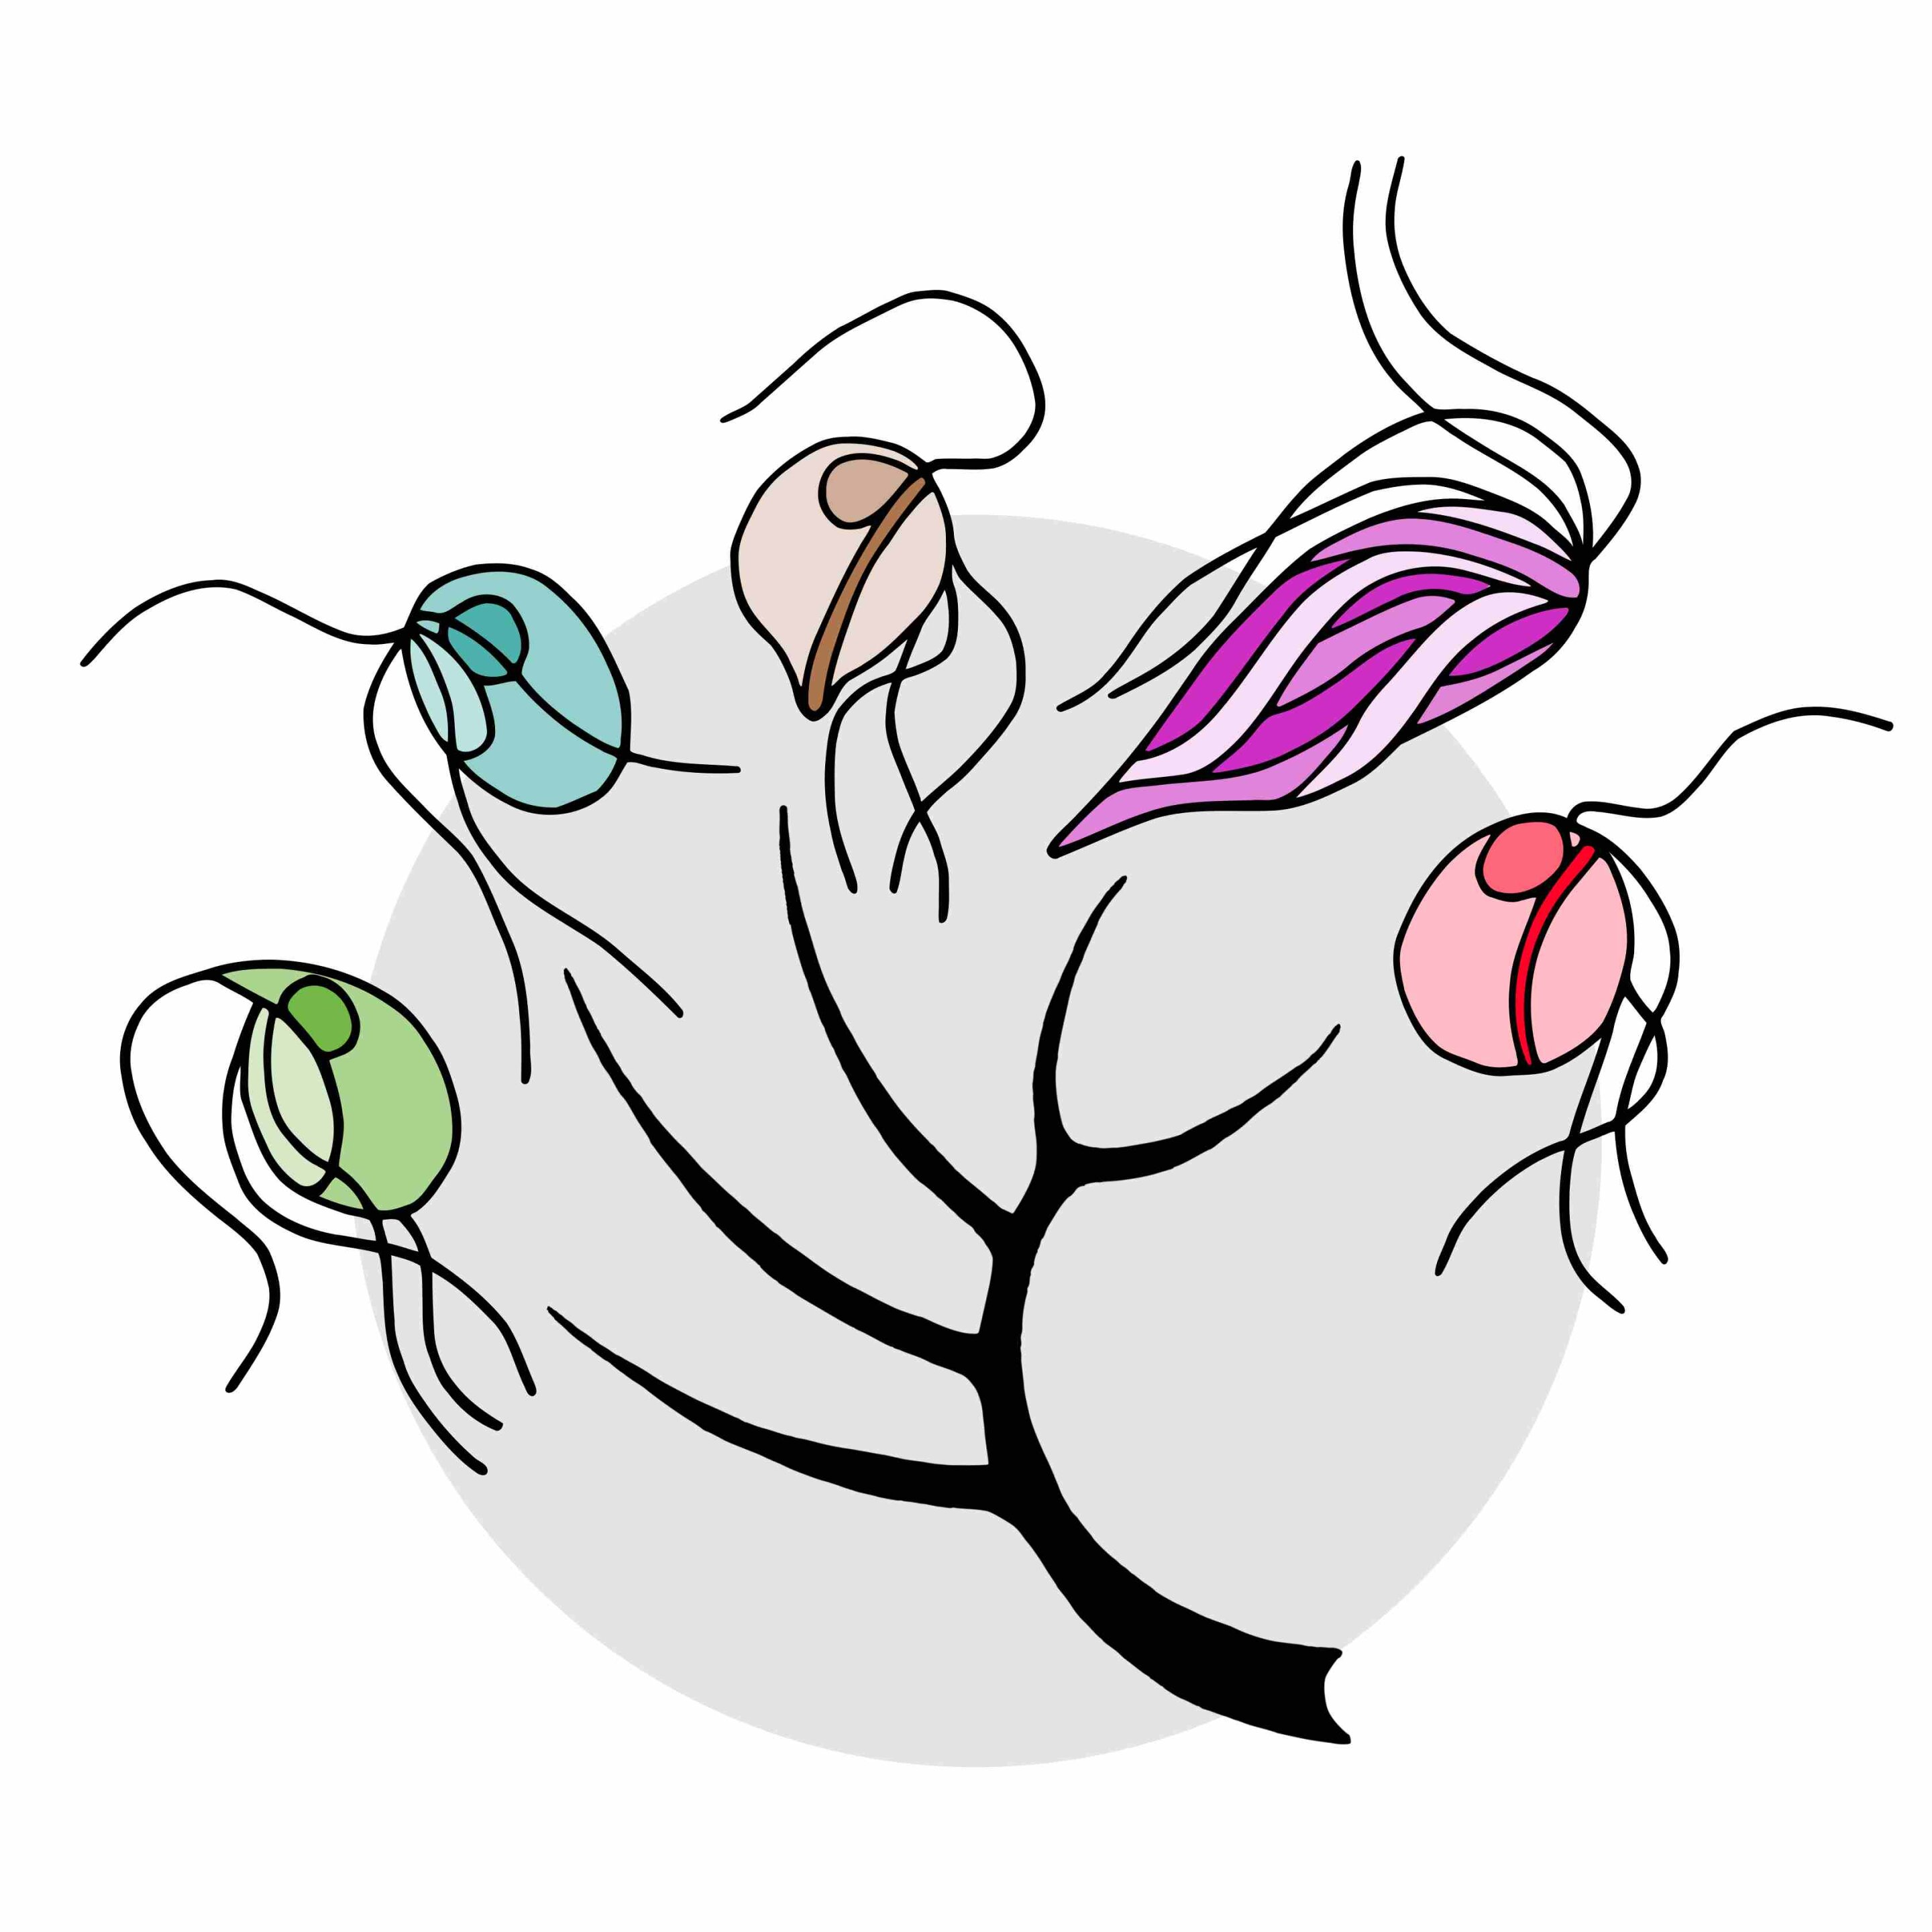 single-celled-protists